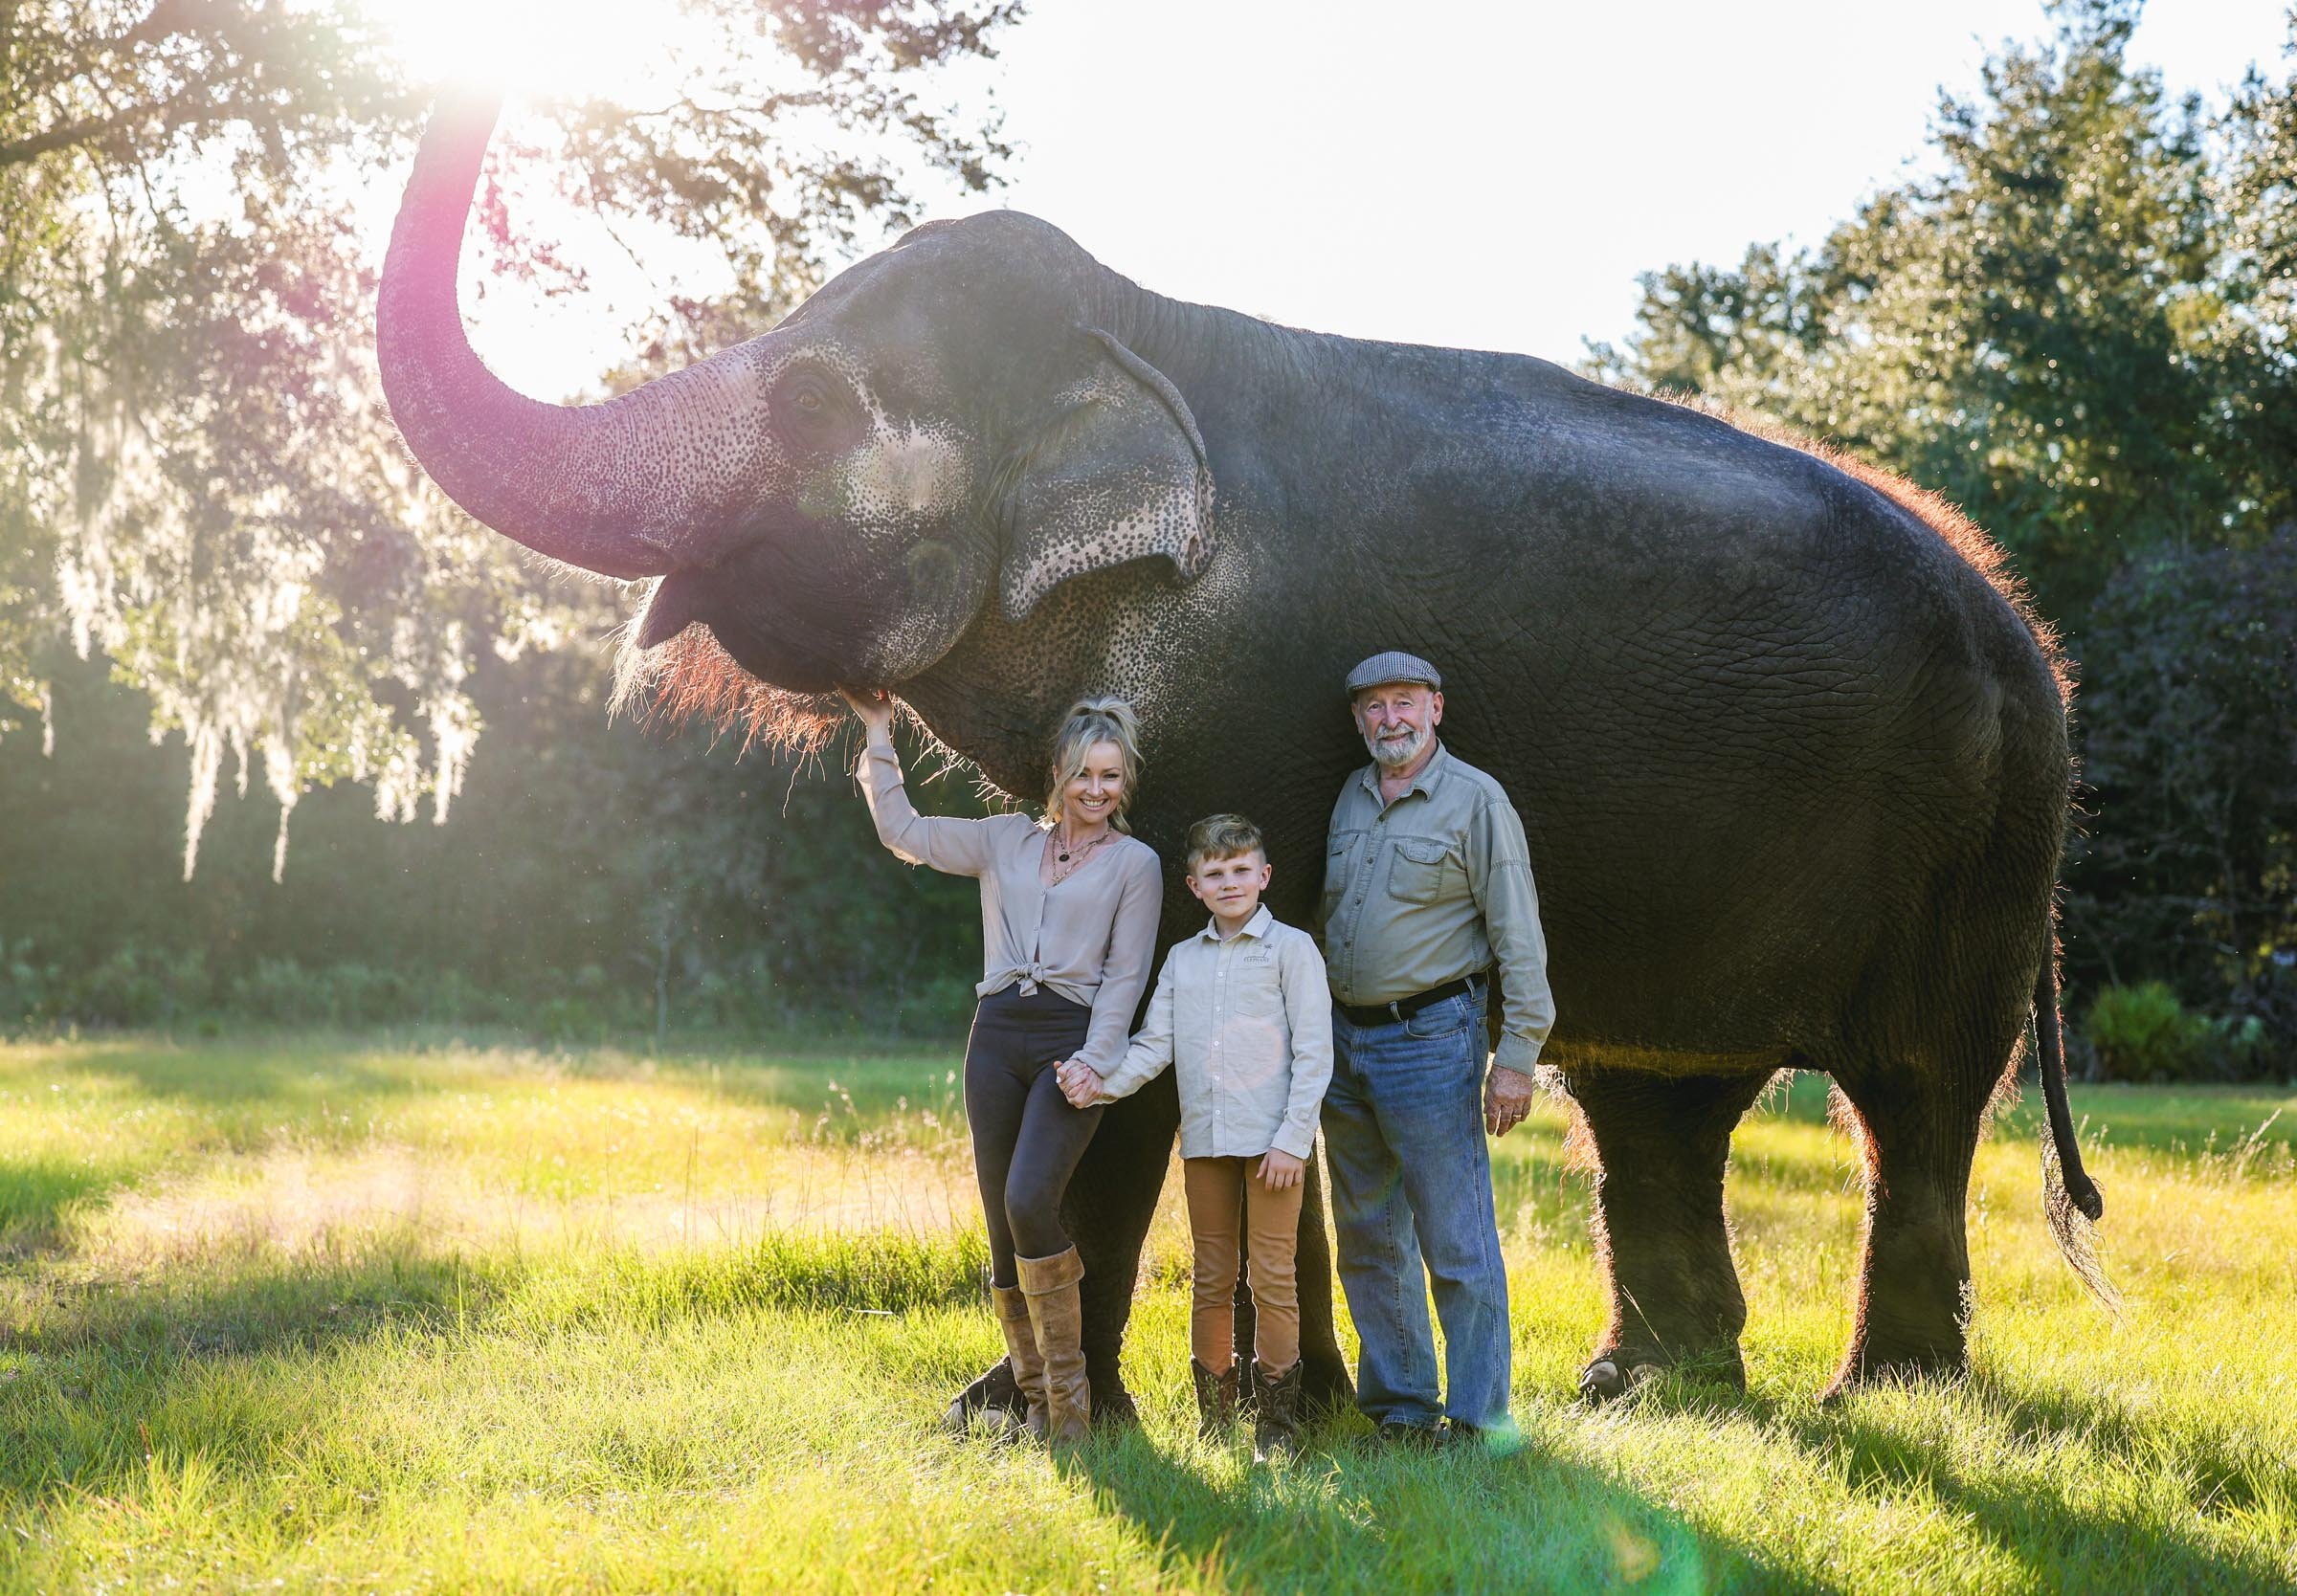 Elephant Gainesville Photography